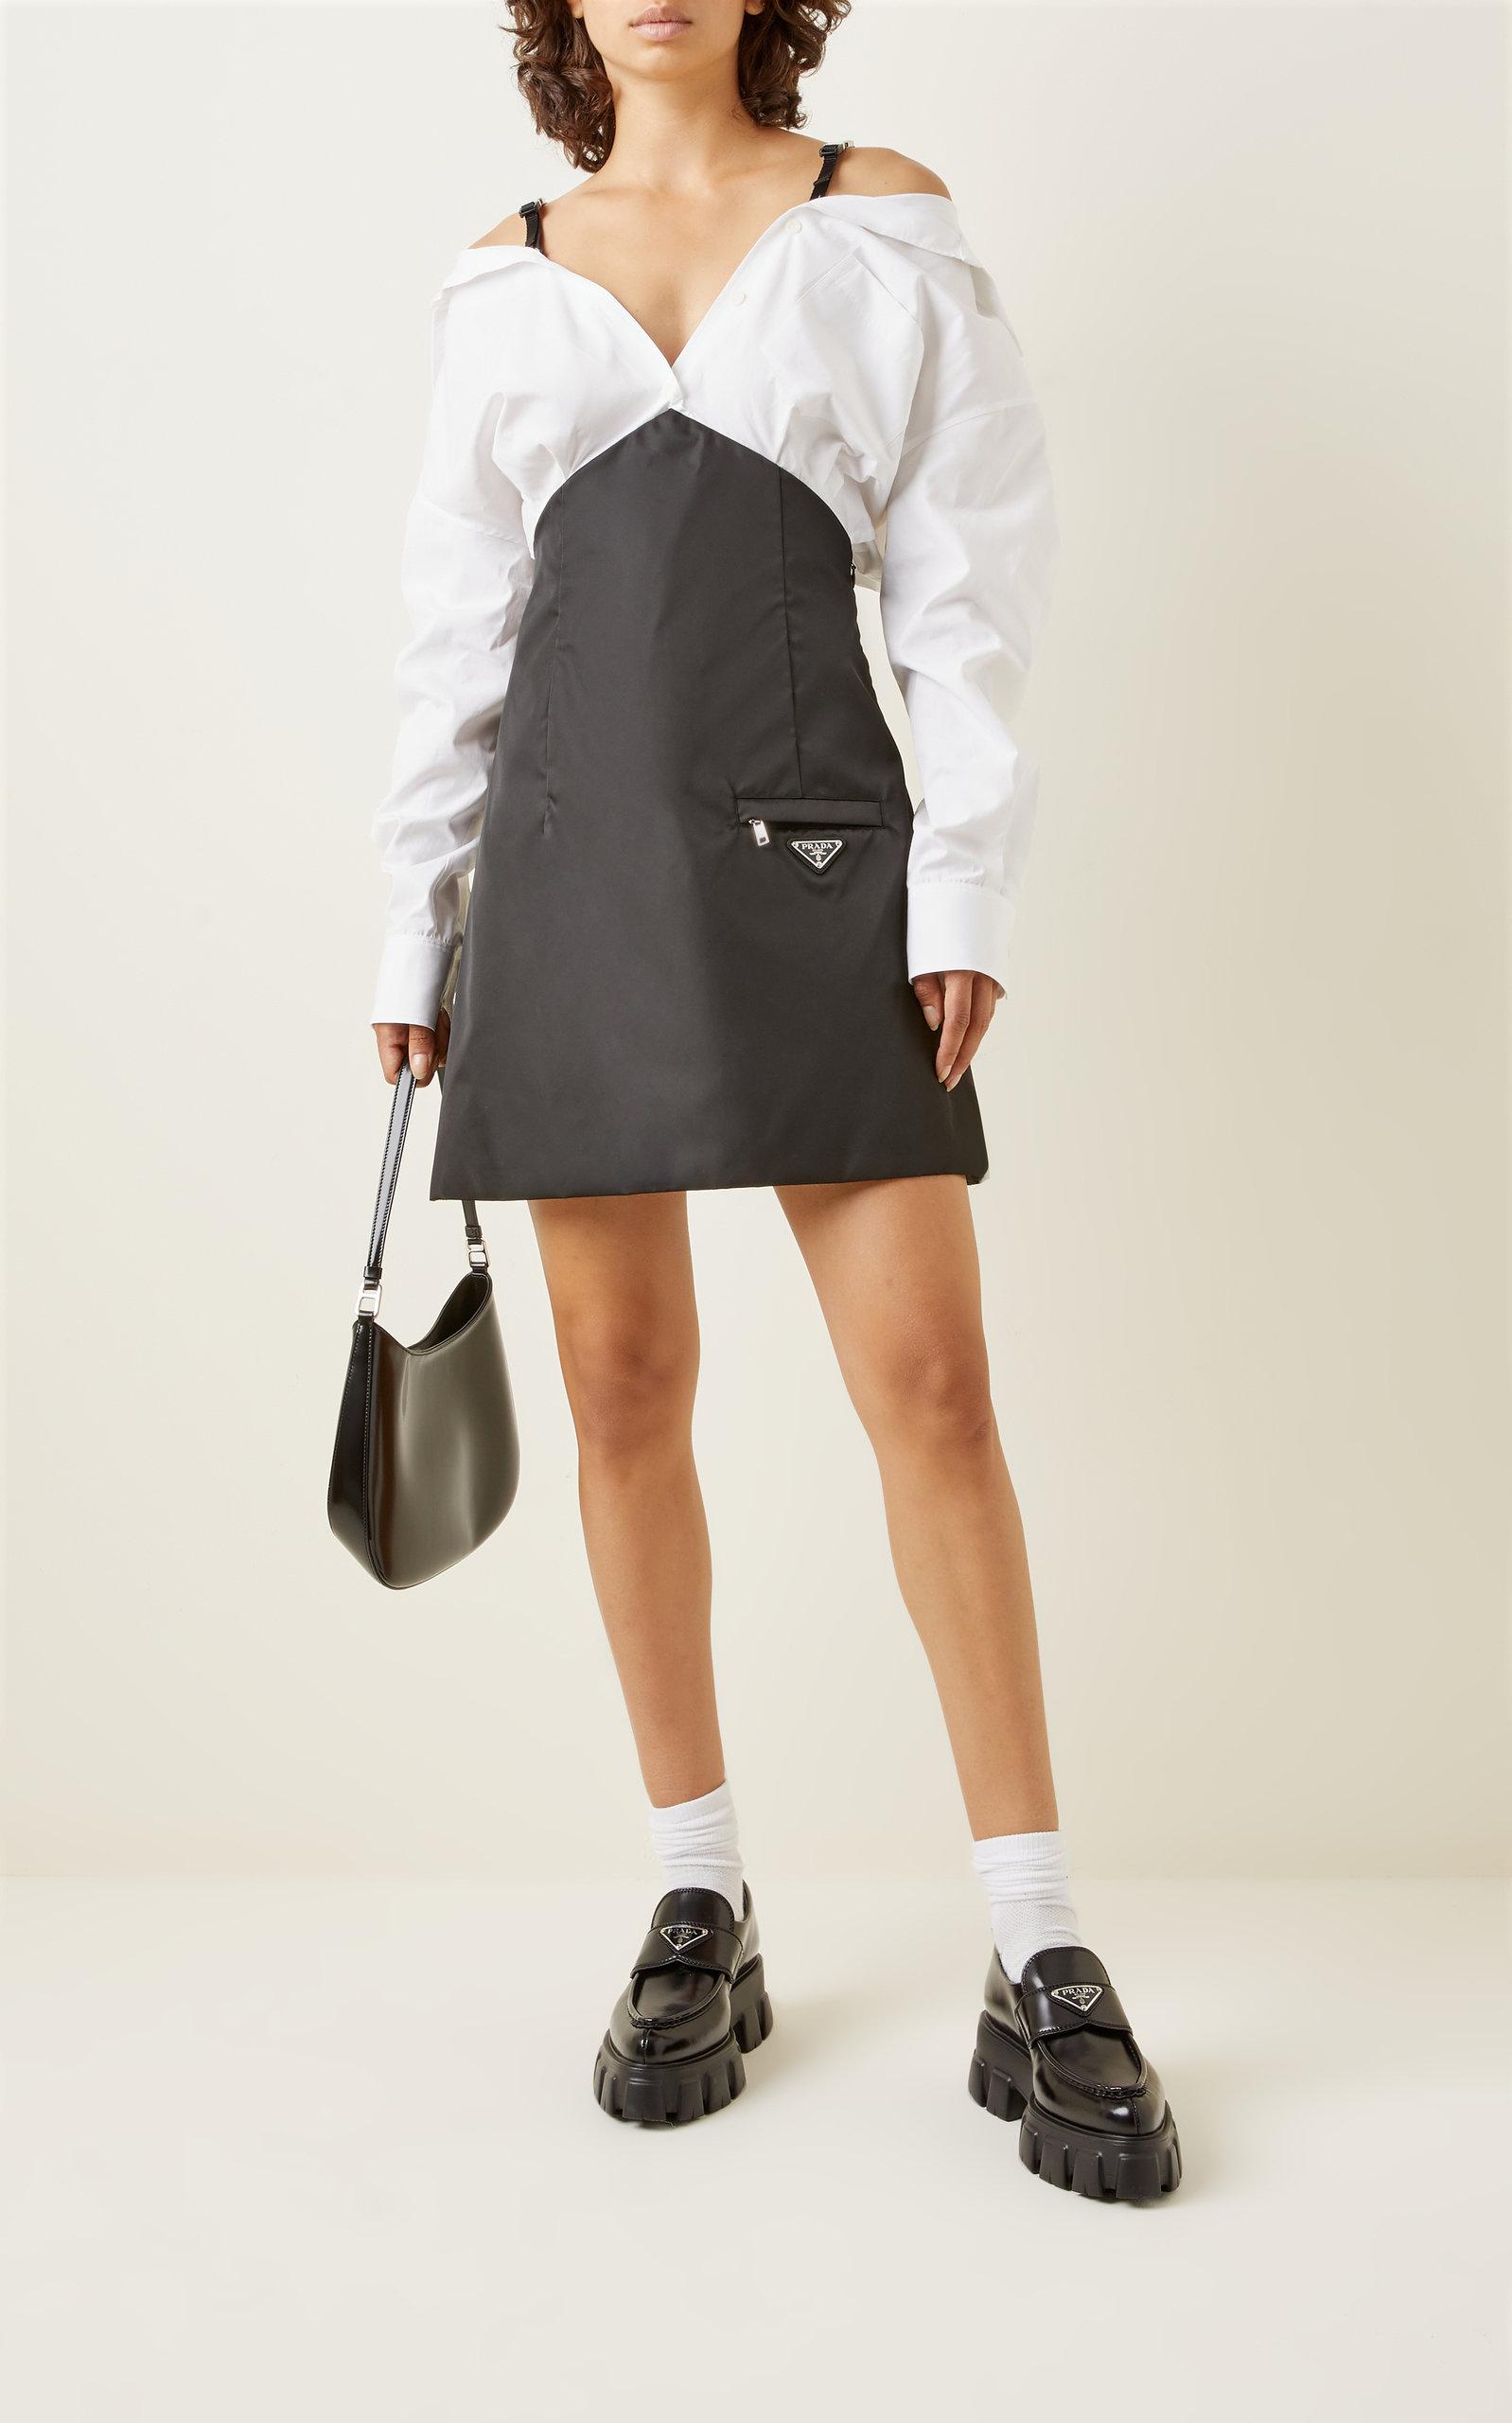 Prada Draped Cotton And Nylon Mini Dress in Black/White (Black) | Lyst